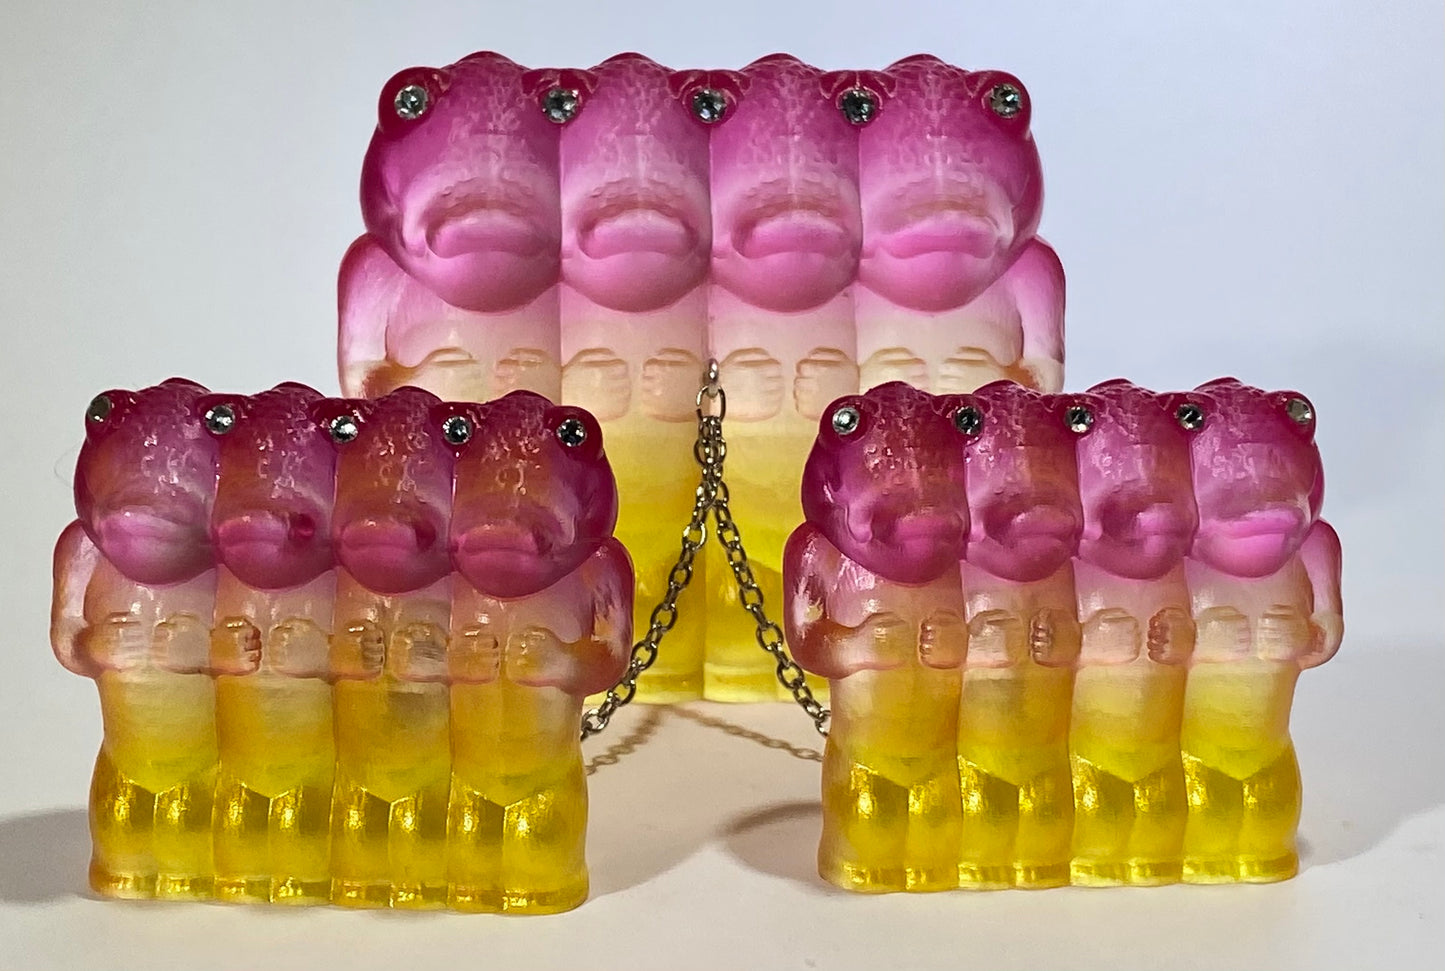 Crocodile Ape Cult: 4 Headed Pink Lemonade Freak-o Gang